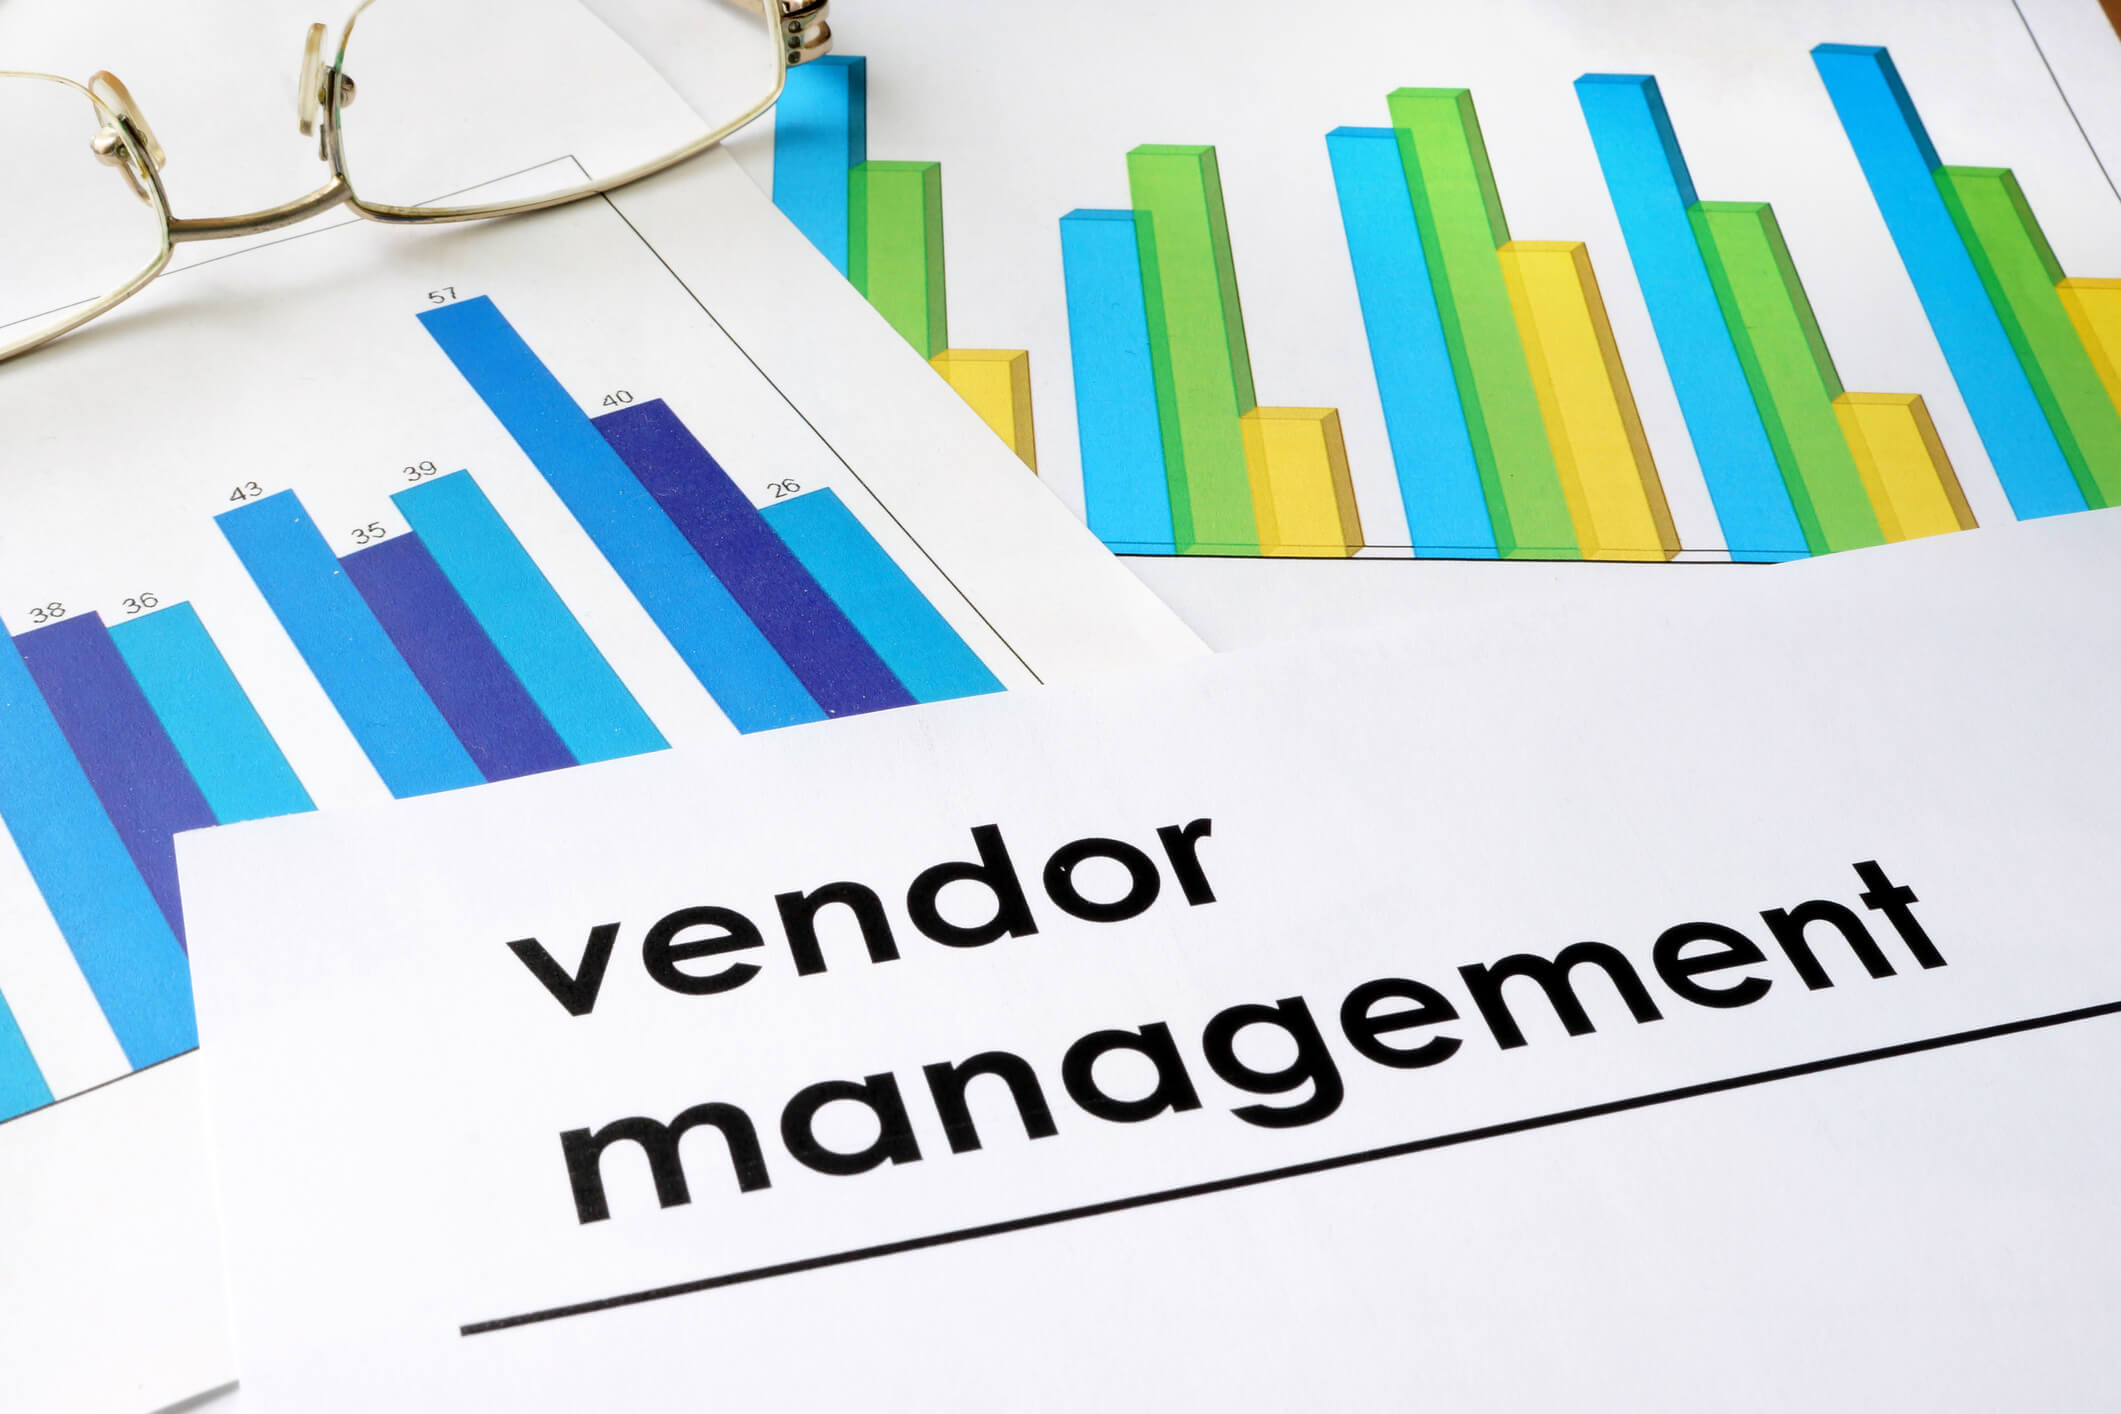 Vendor Management - Complete Controller